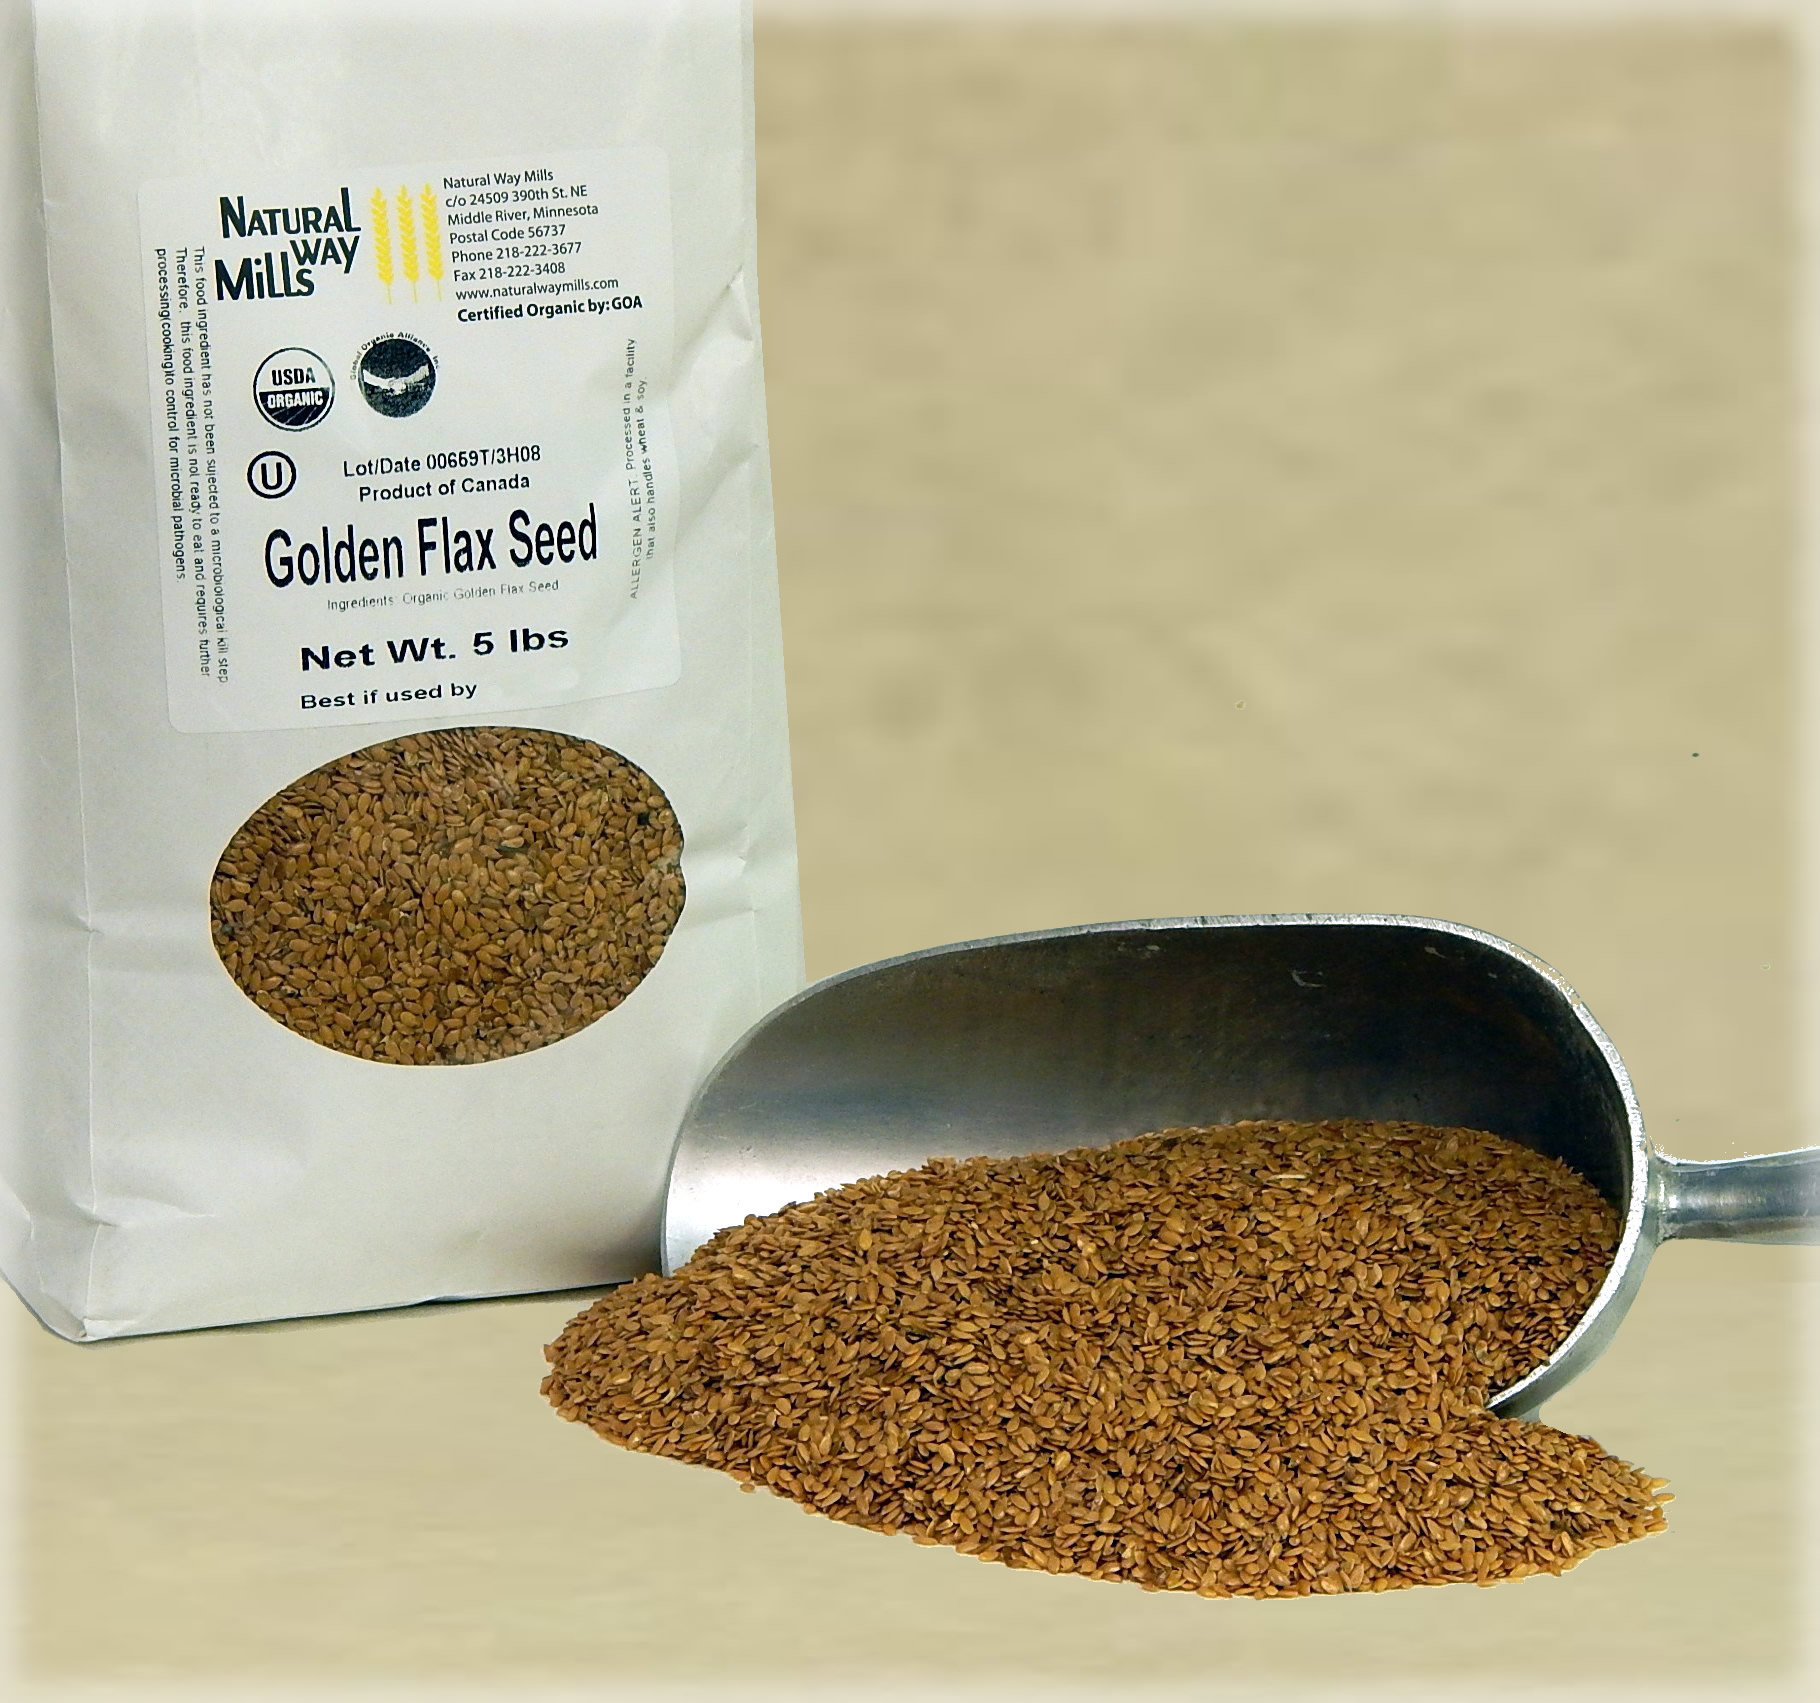 Natural Way Mills: Organic Golden Flax Seed, Organic Grains, Organic-Golden- Flax-Seed